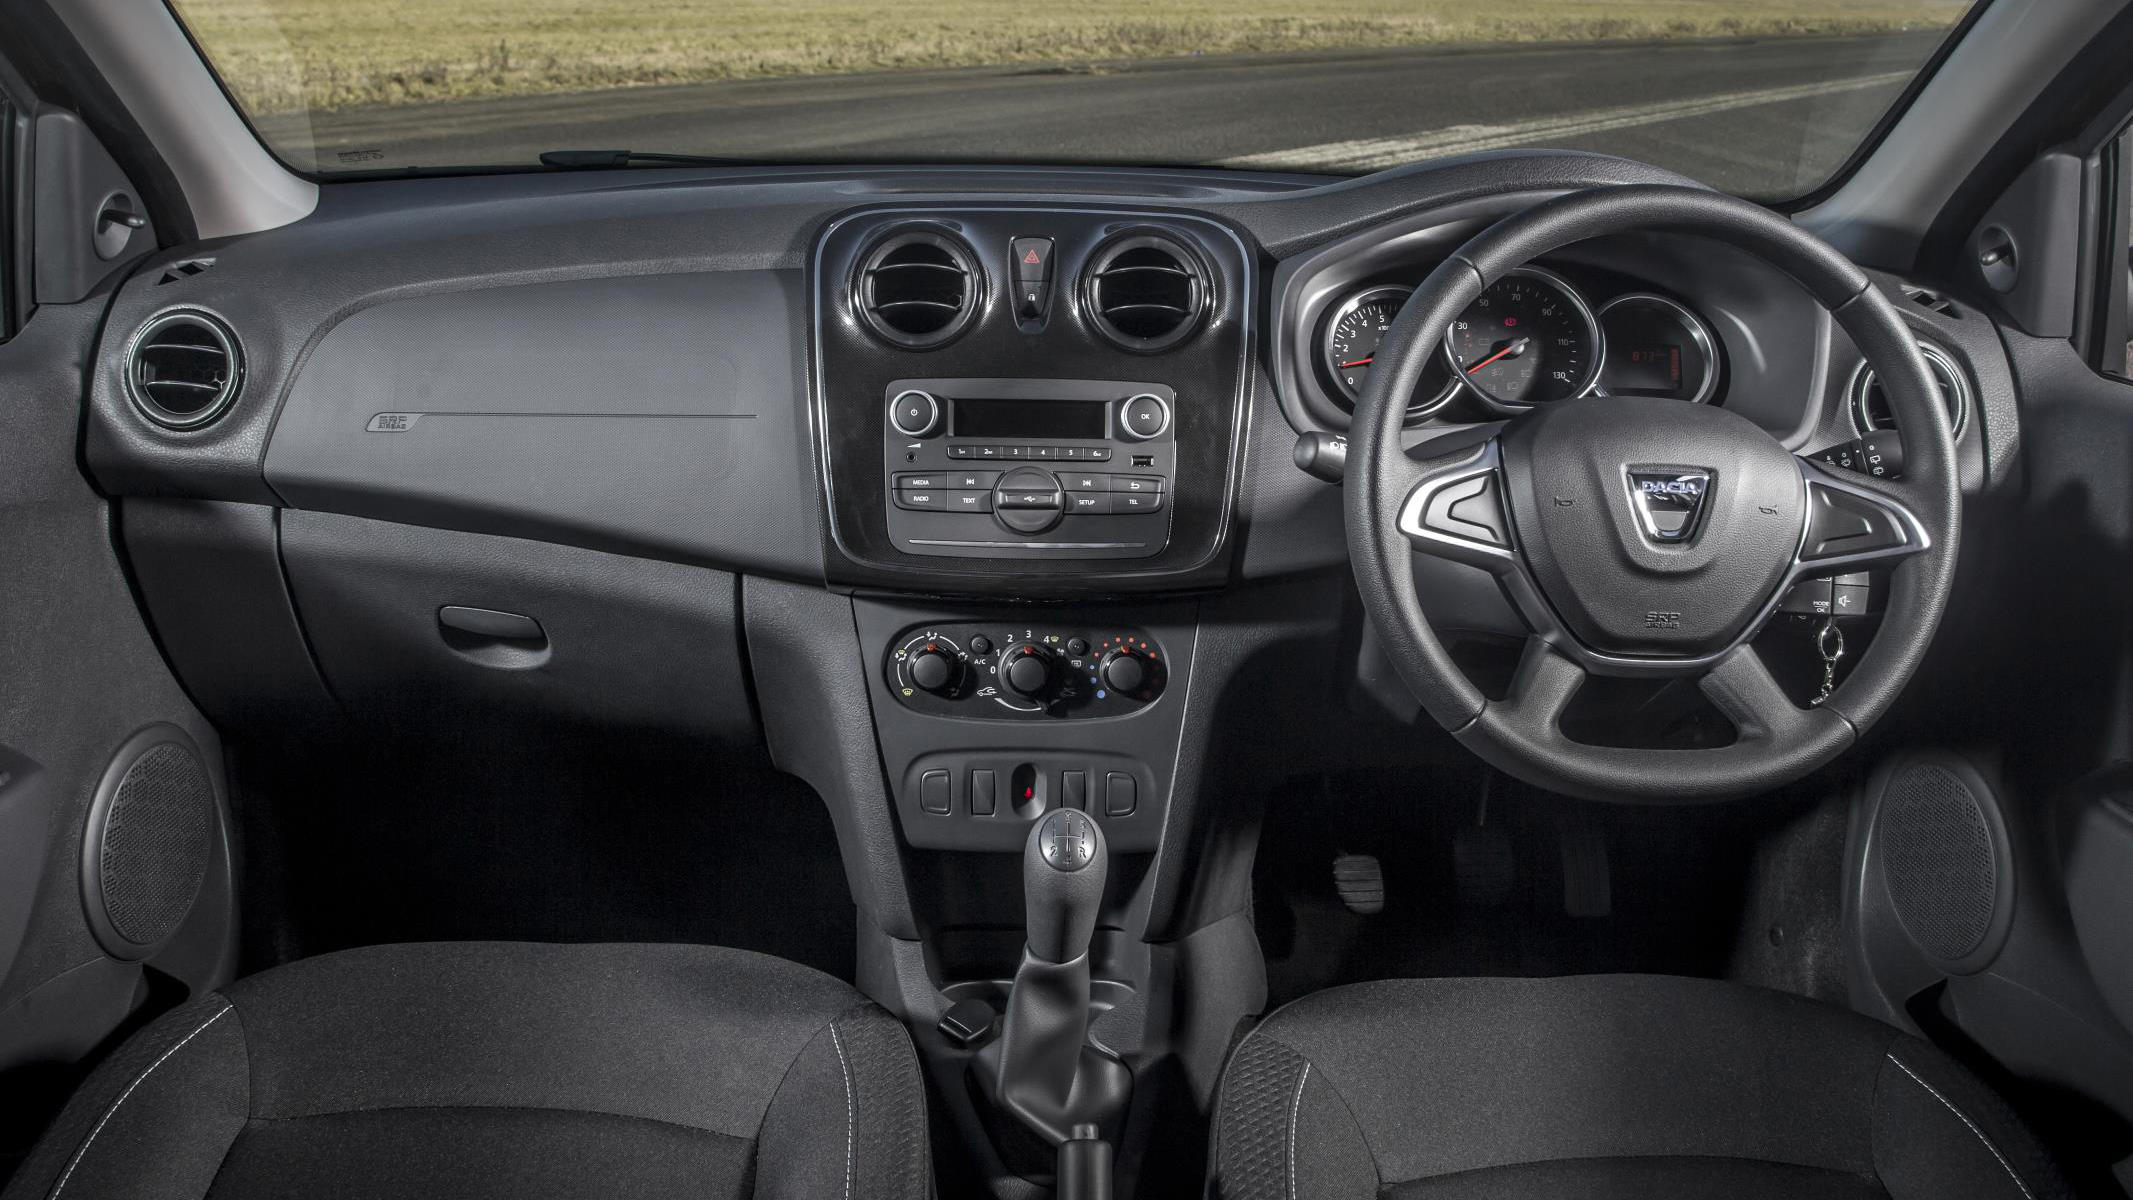 Dacia Logan Mcv Estate 16 Review Auto Trader Uk